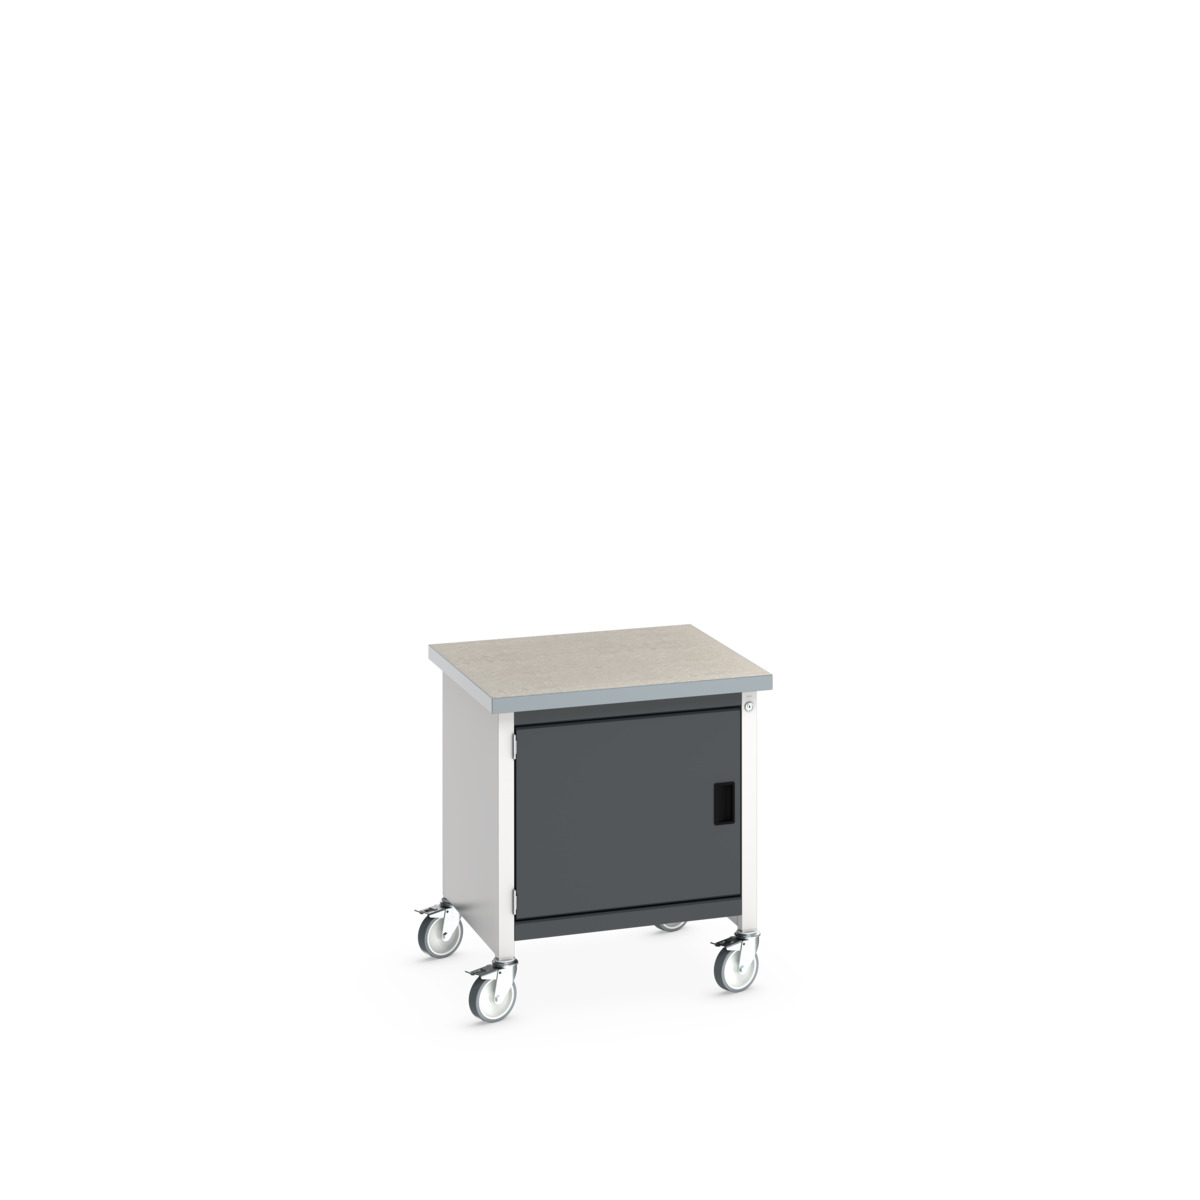 41002087. - cubio mobile storage bench (lino)